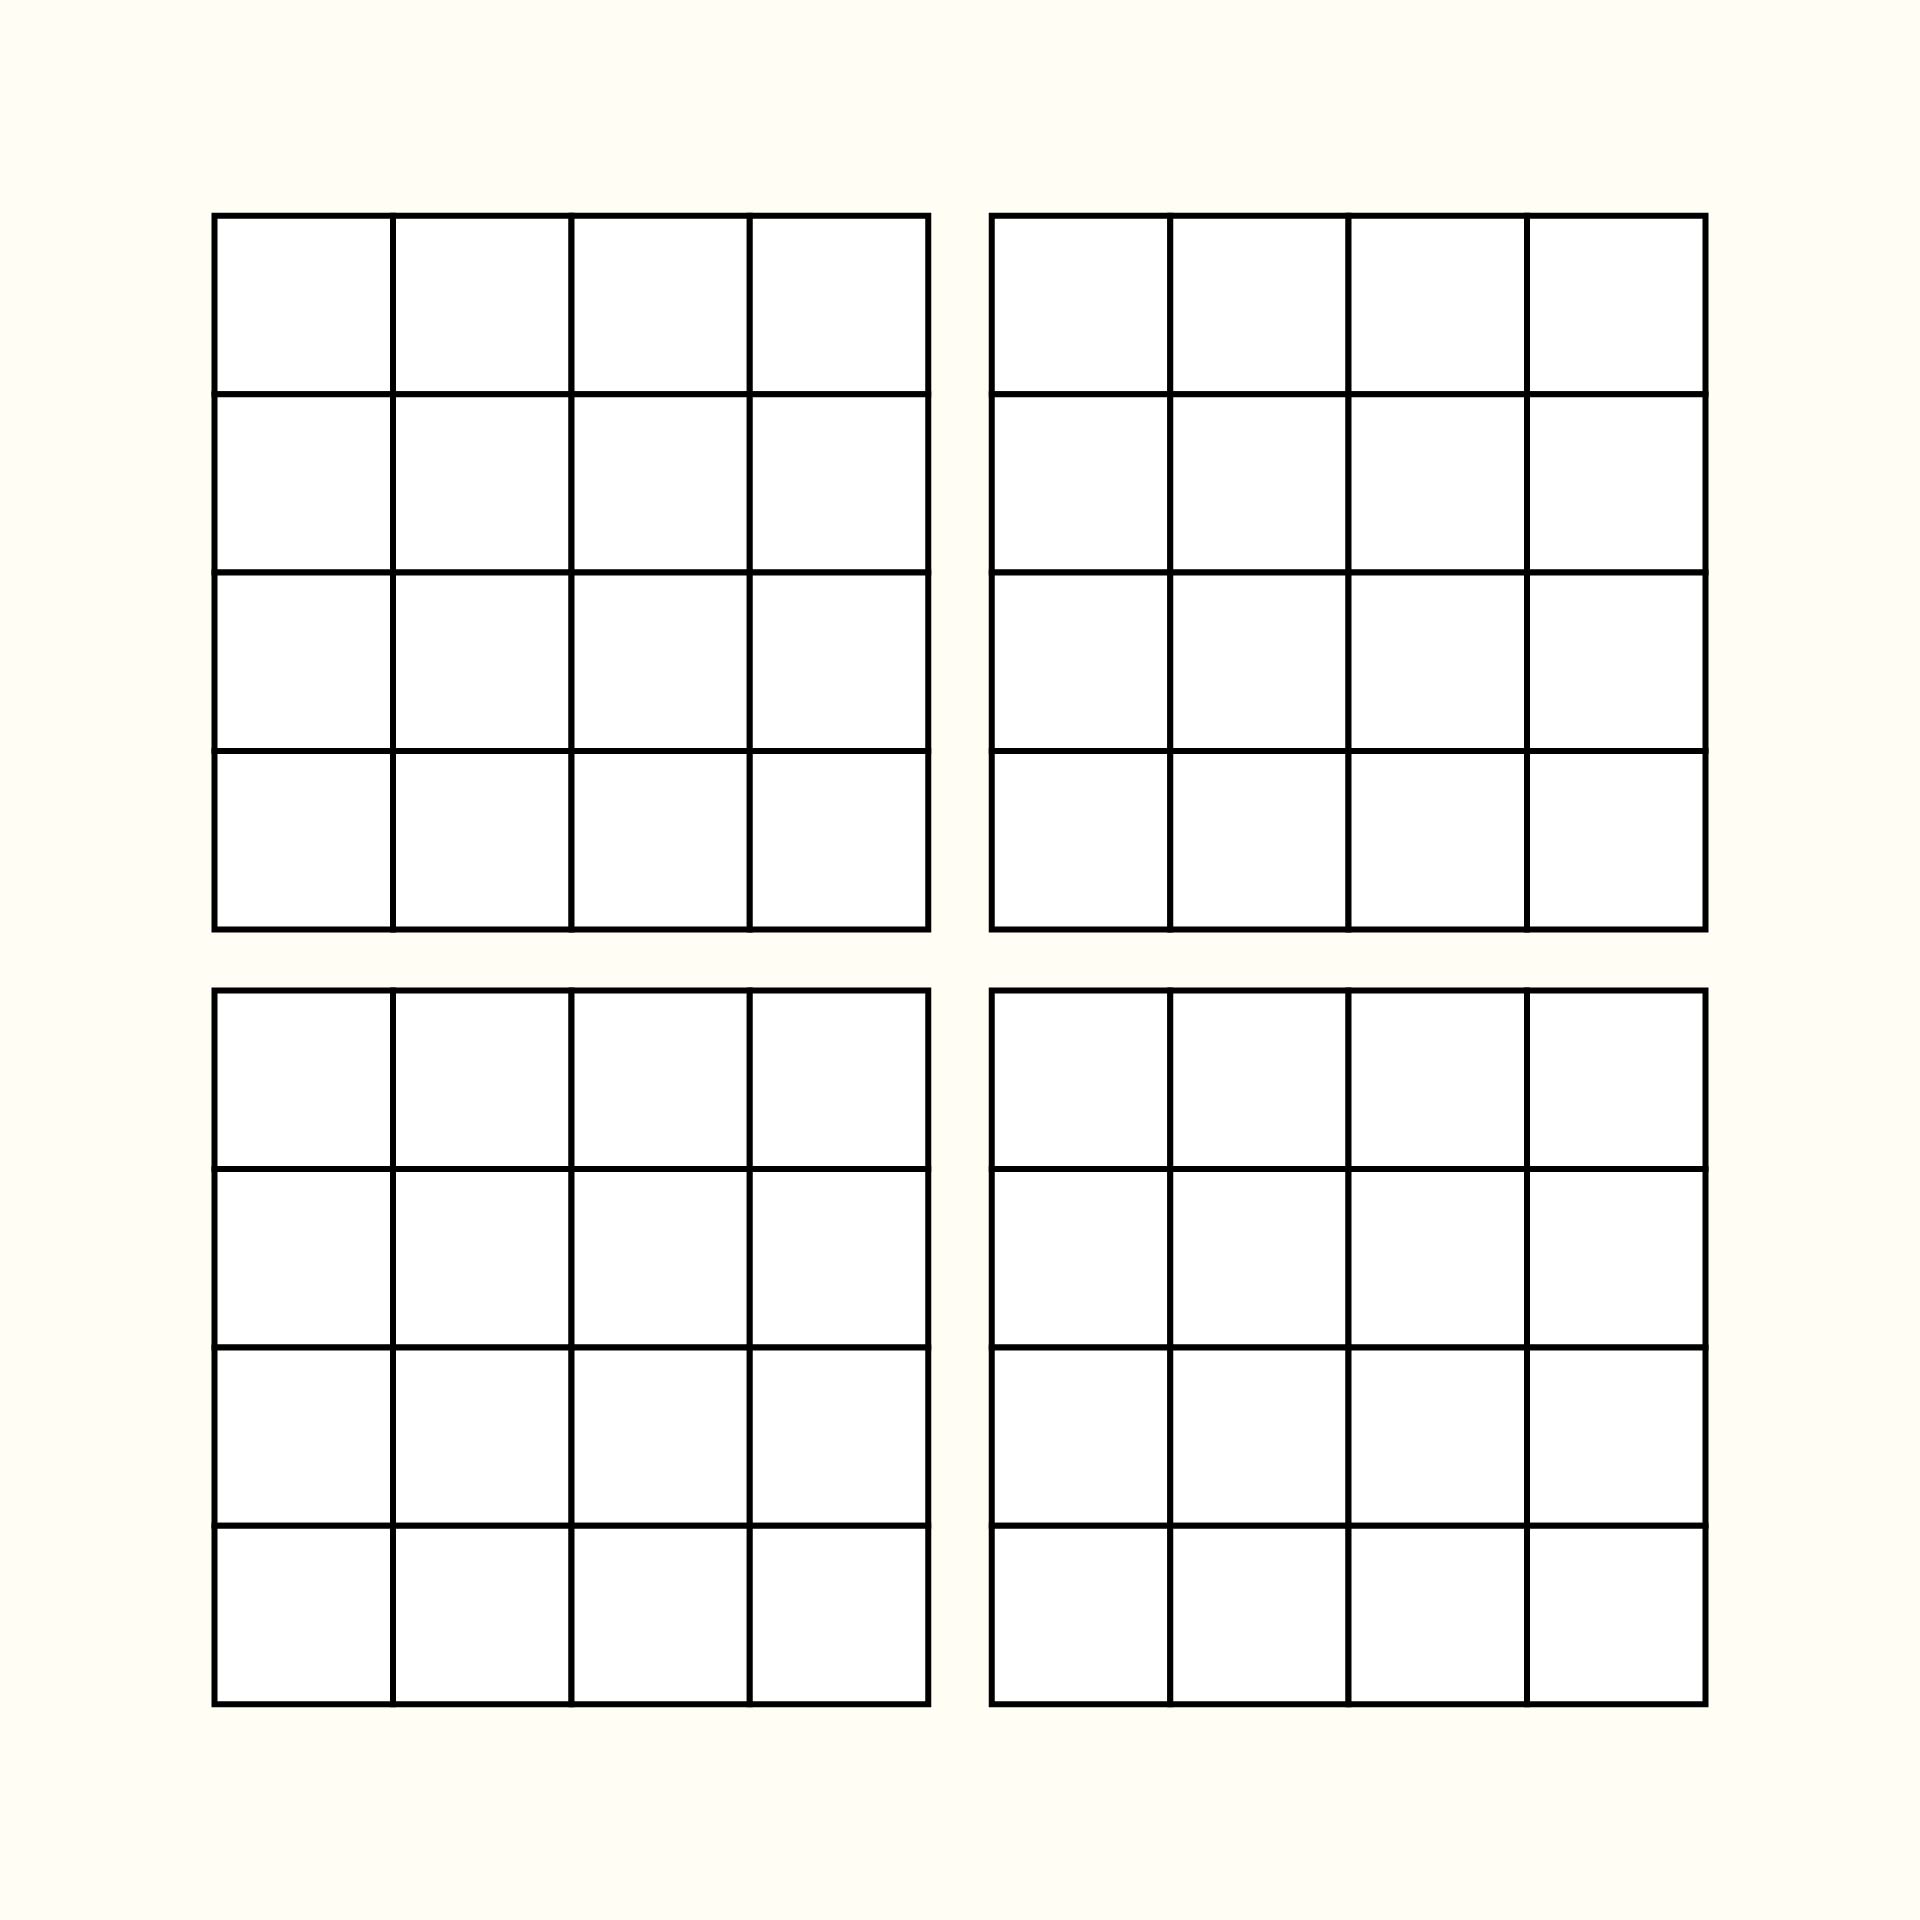 4X4 Empty Sudoku Grid Printable Templates